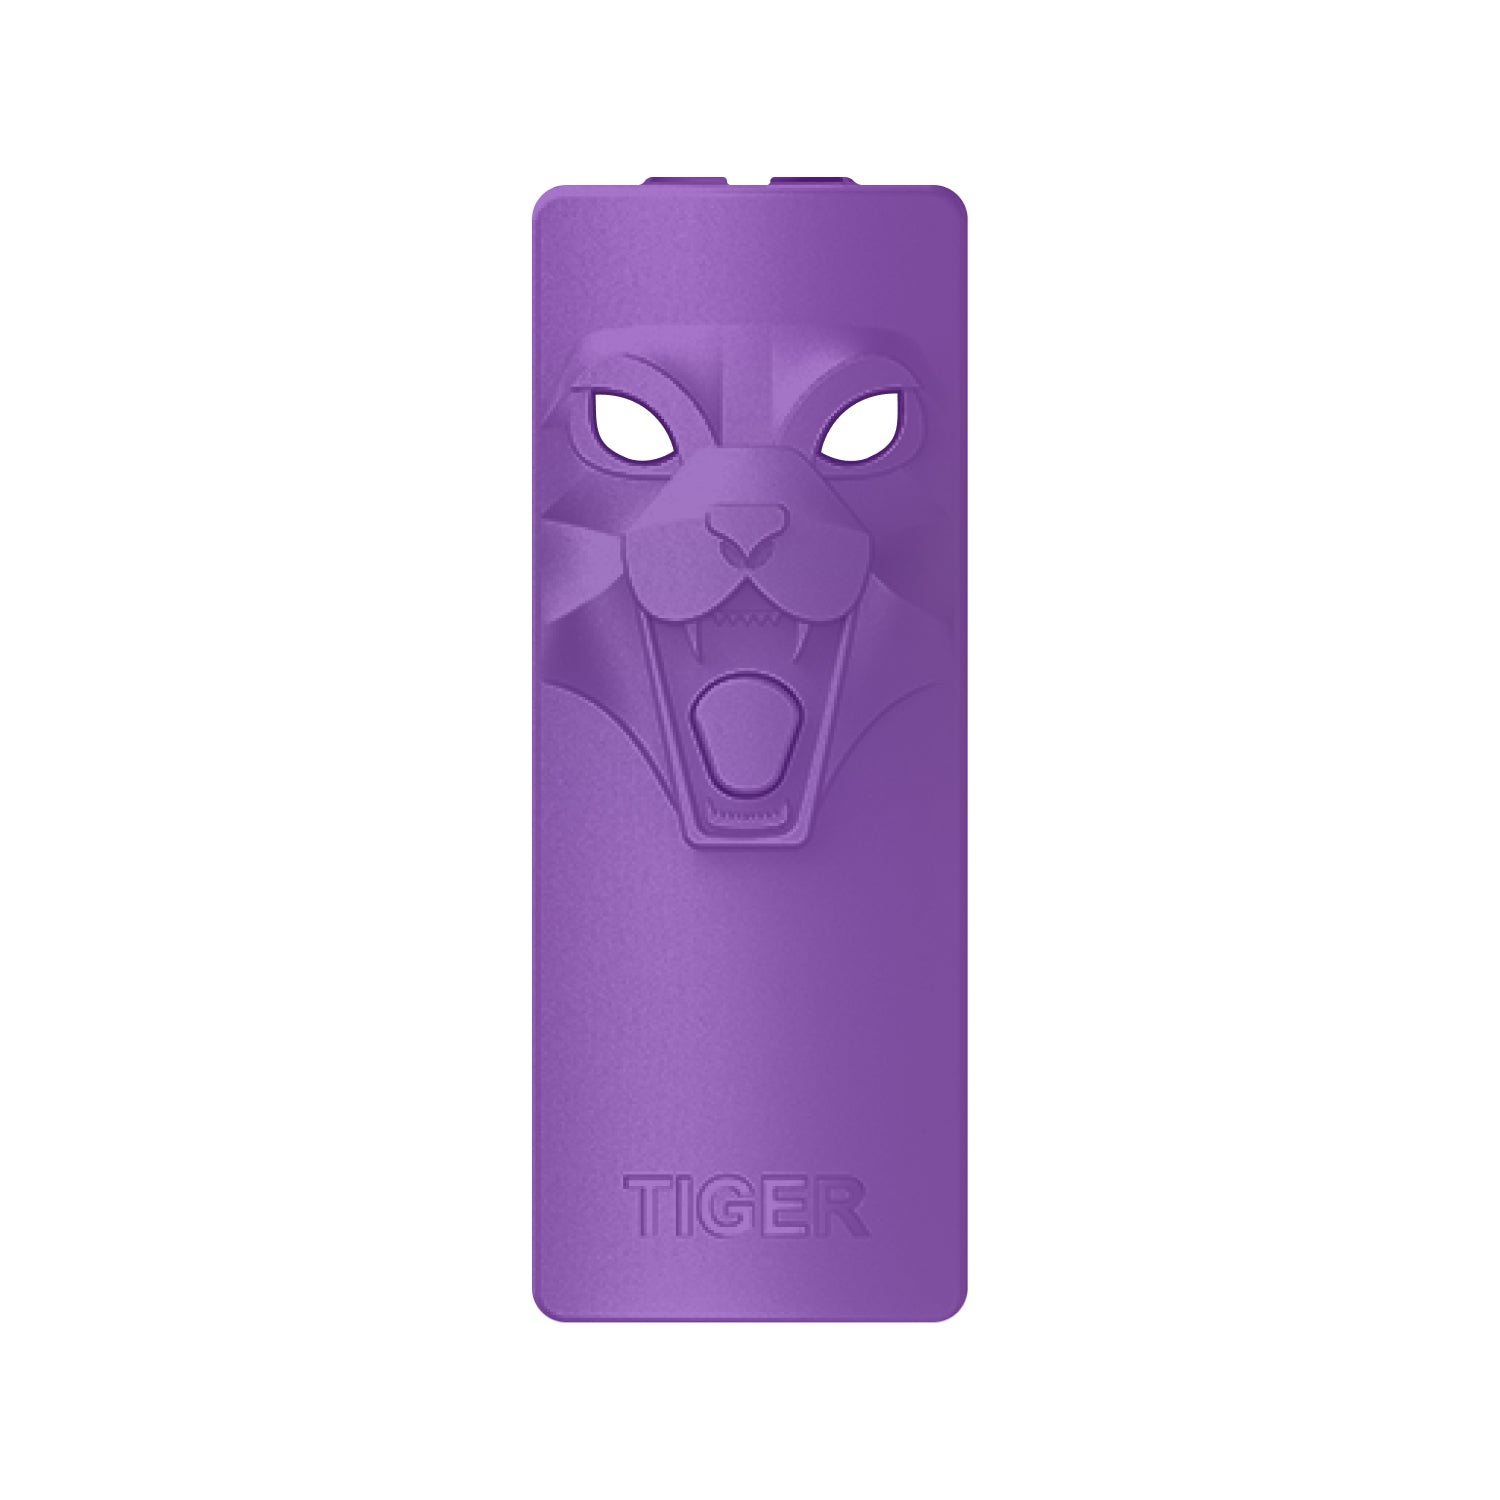 Yocan Kodo Animal Box Mod - tiger - purple